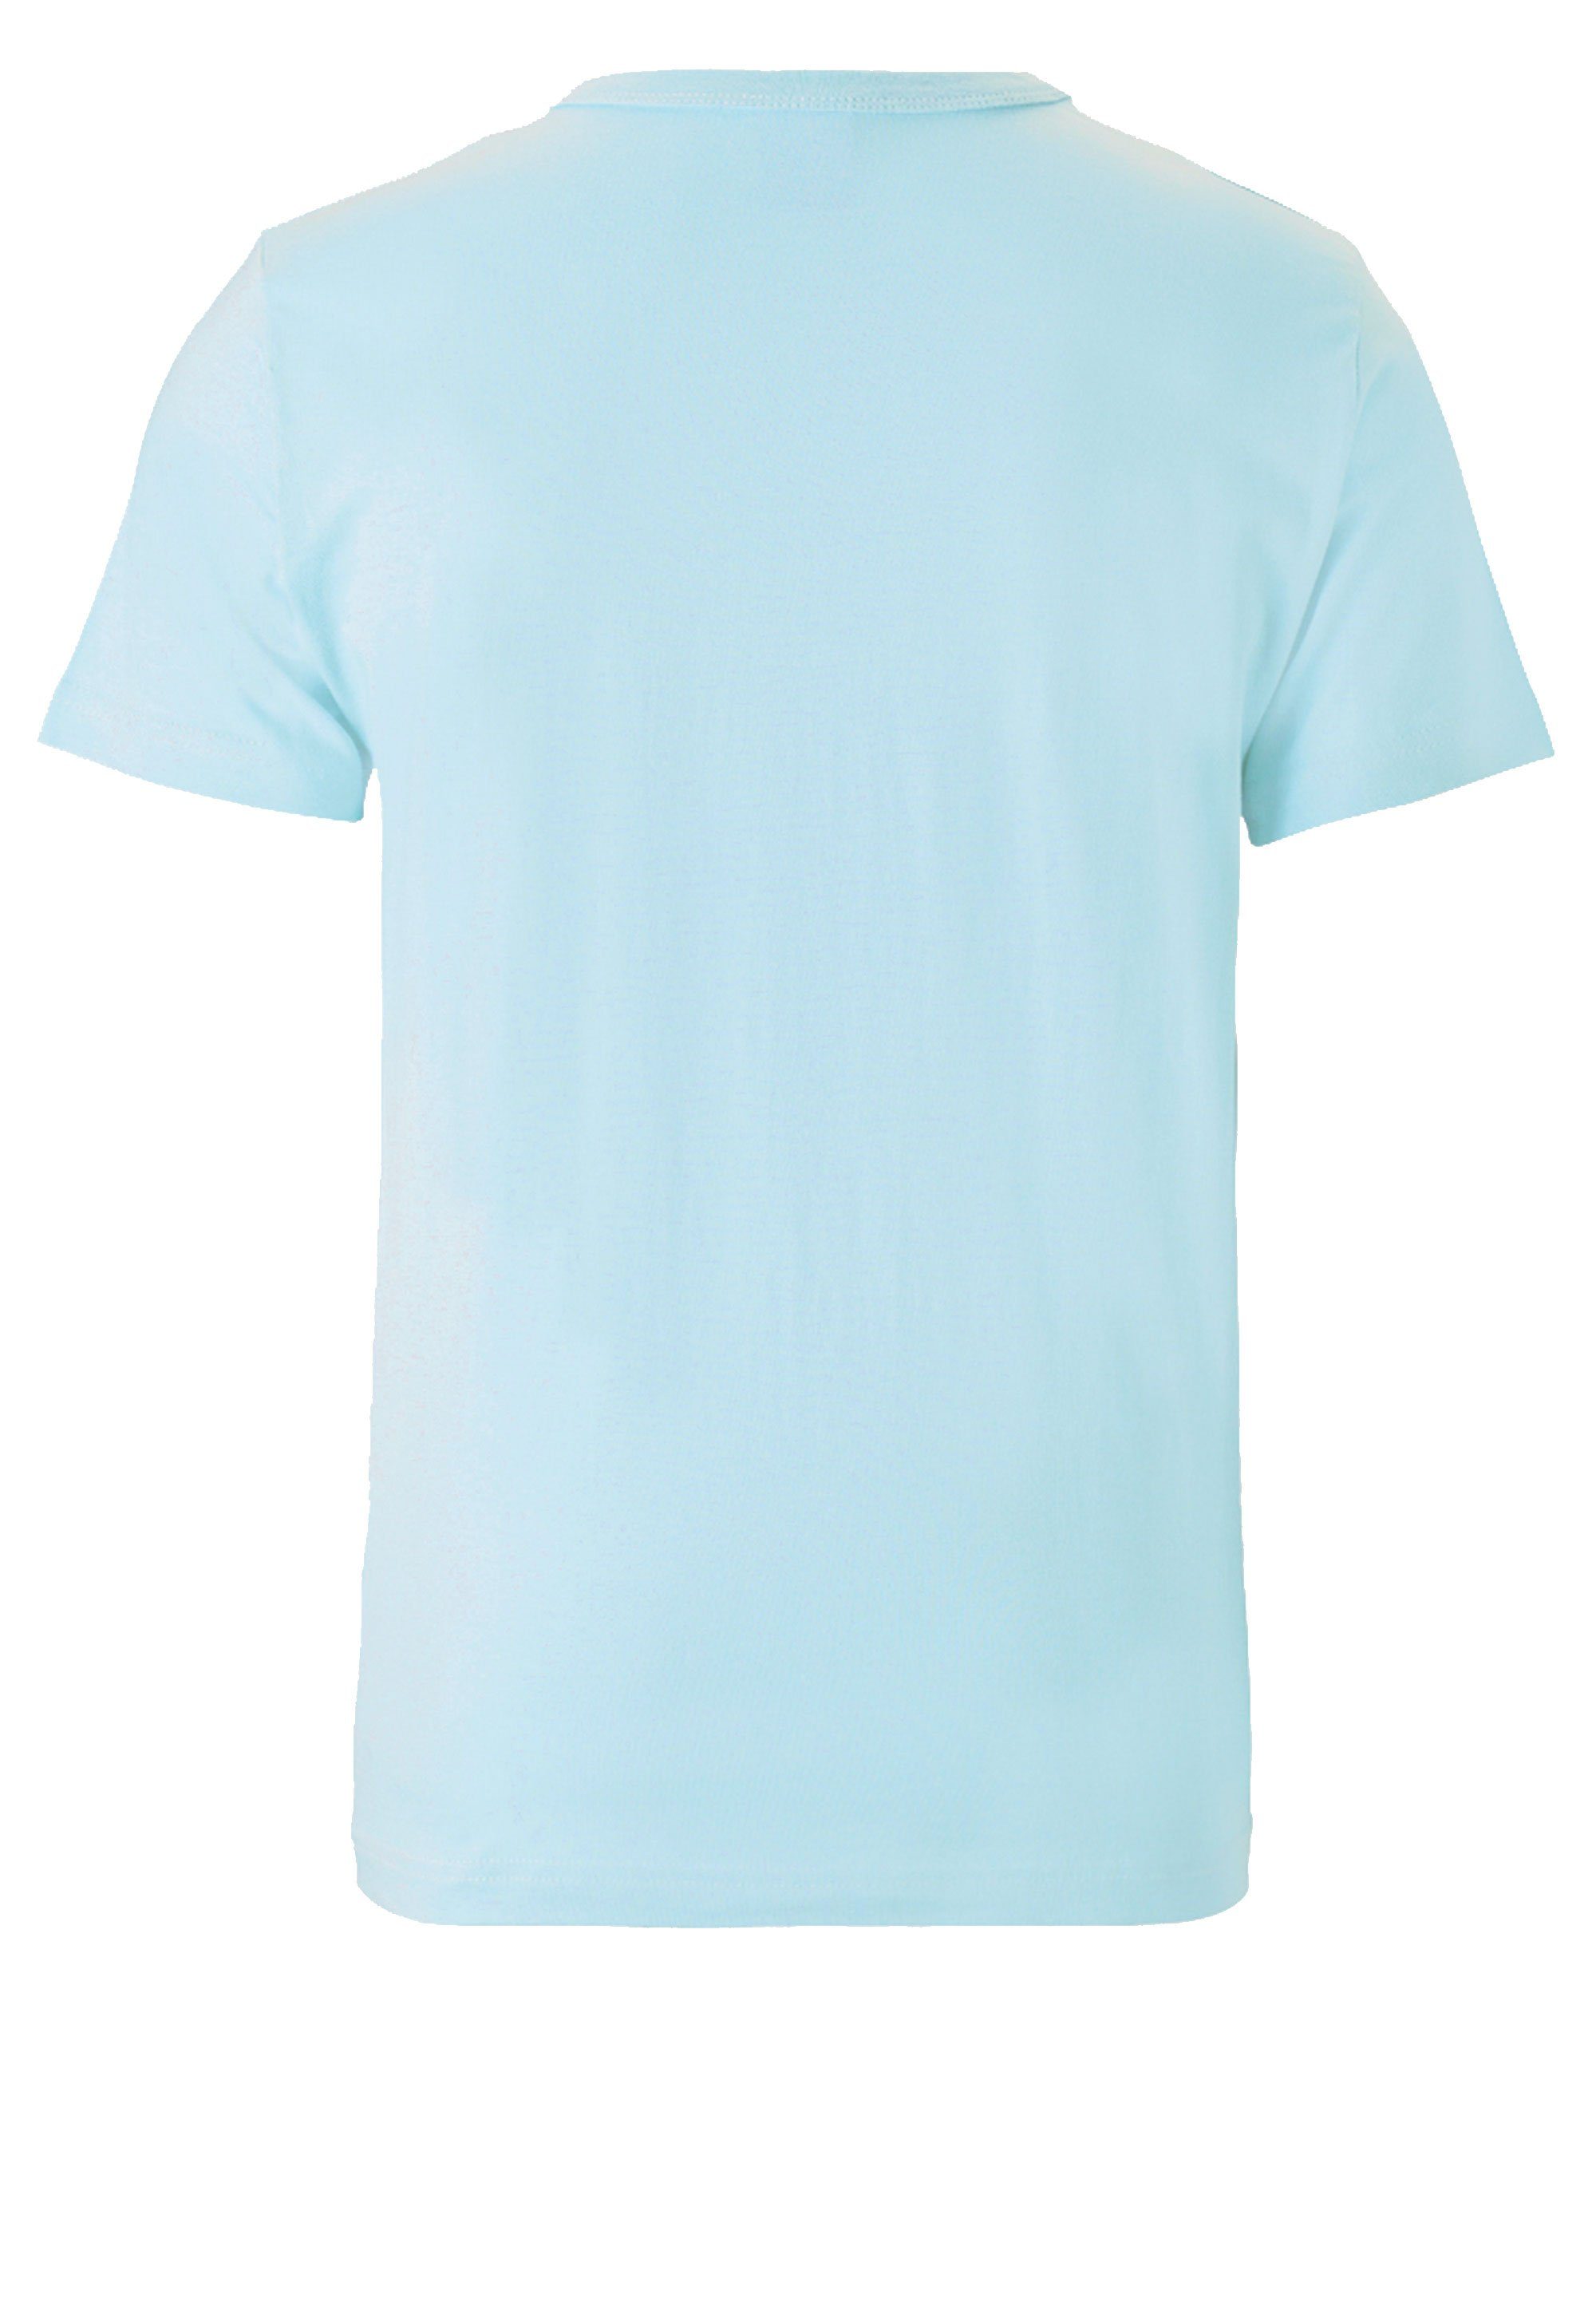 - Sesamstrasse Krümelmonster Originalddesign hellblau T-Shirt LOGOSHIRT mit lizenziertem